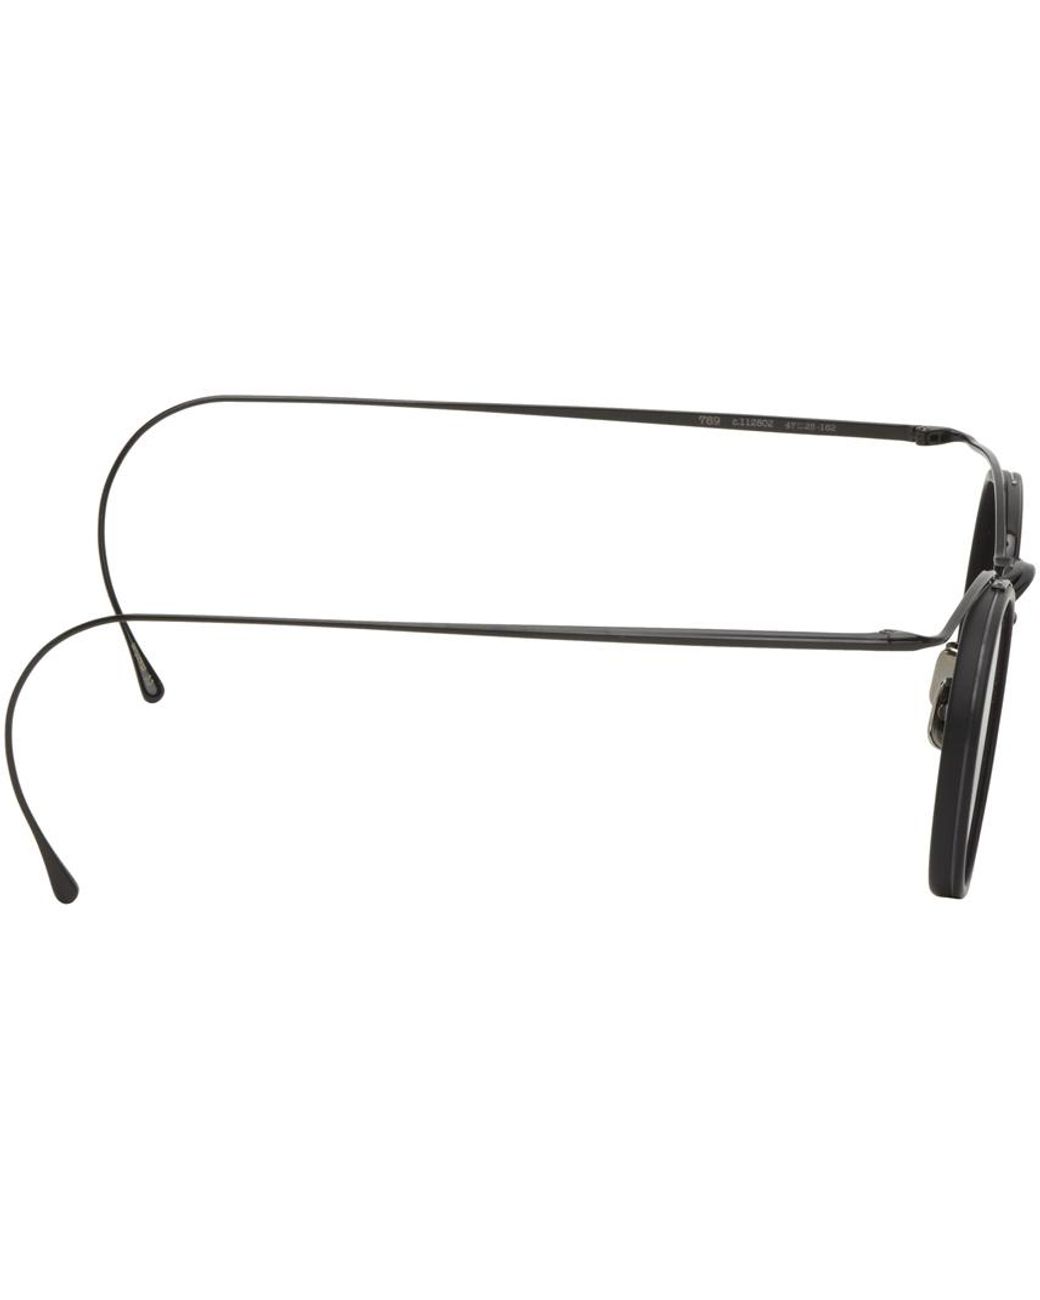 Eyevan 7285 Black 789 Sunglasses for Men | Lyst Canada